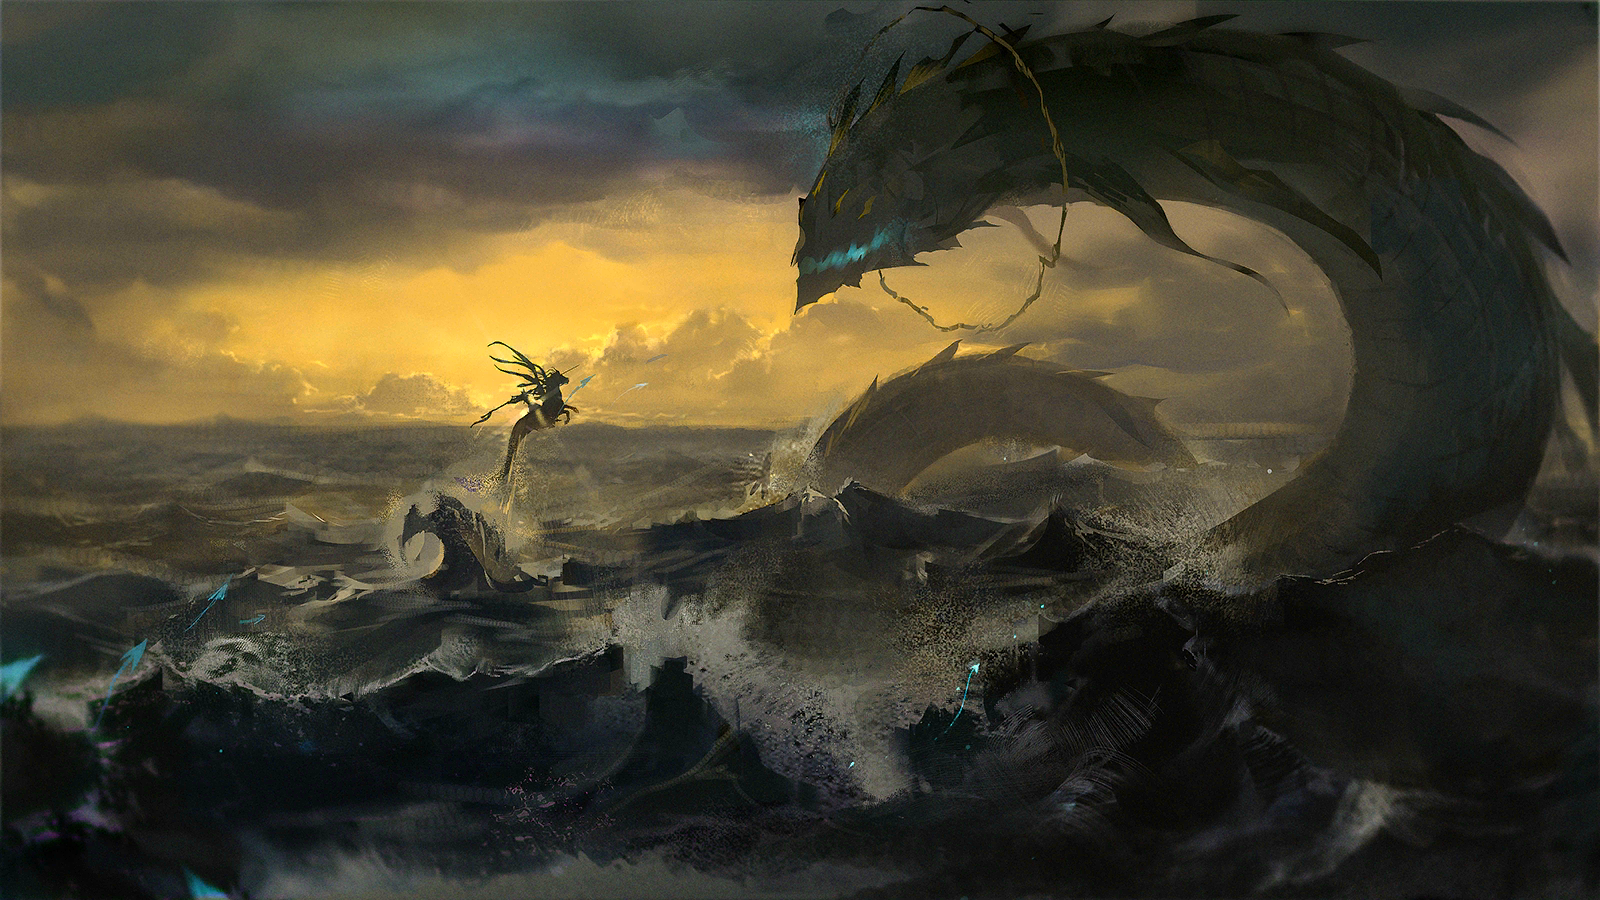 Dragoon (Final Fantasy XI), Final Fantasy Wiki